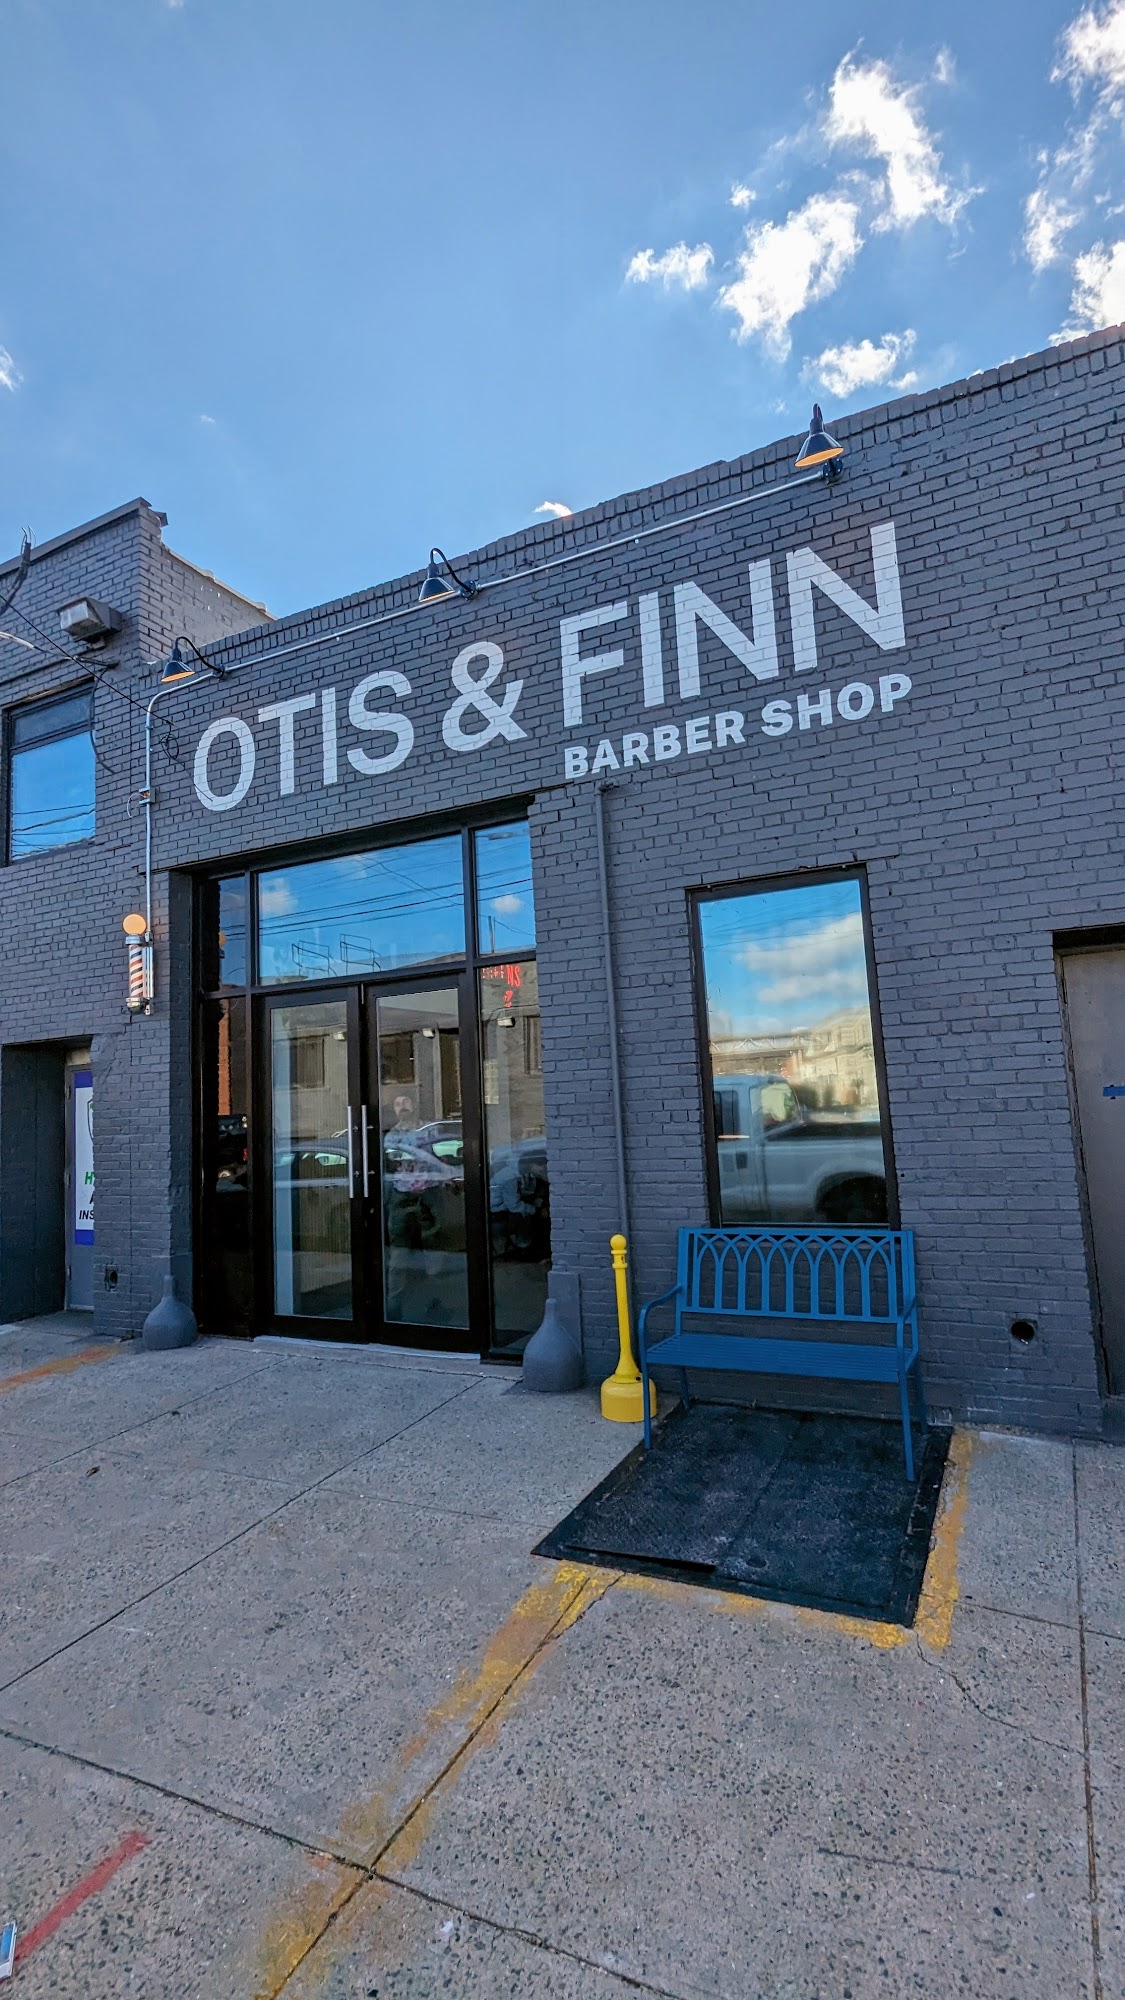 Otis & Finn Barbershop